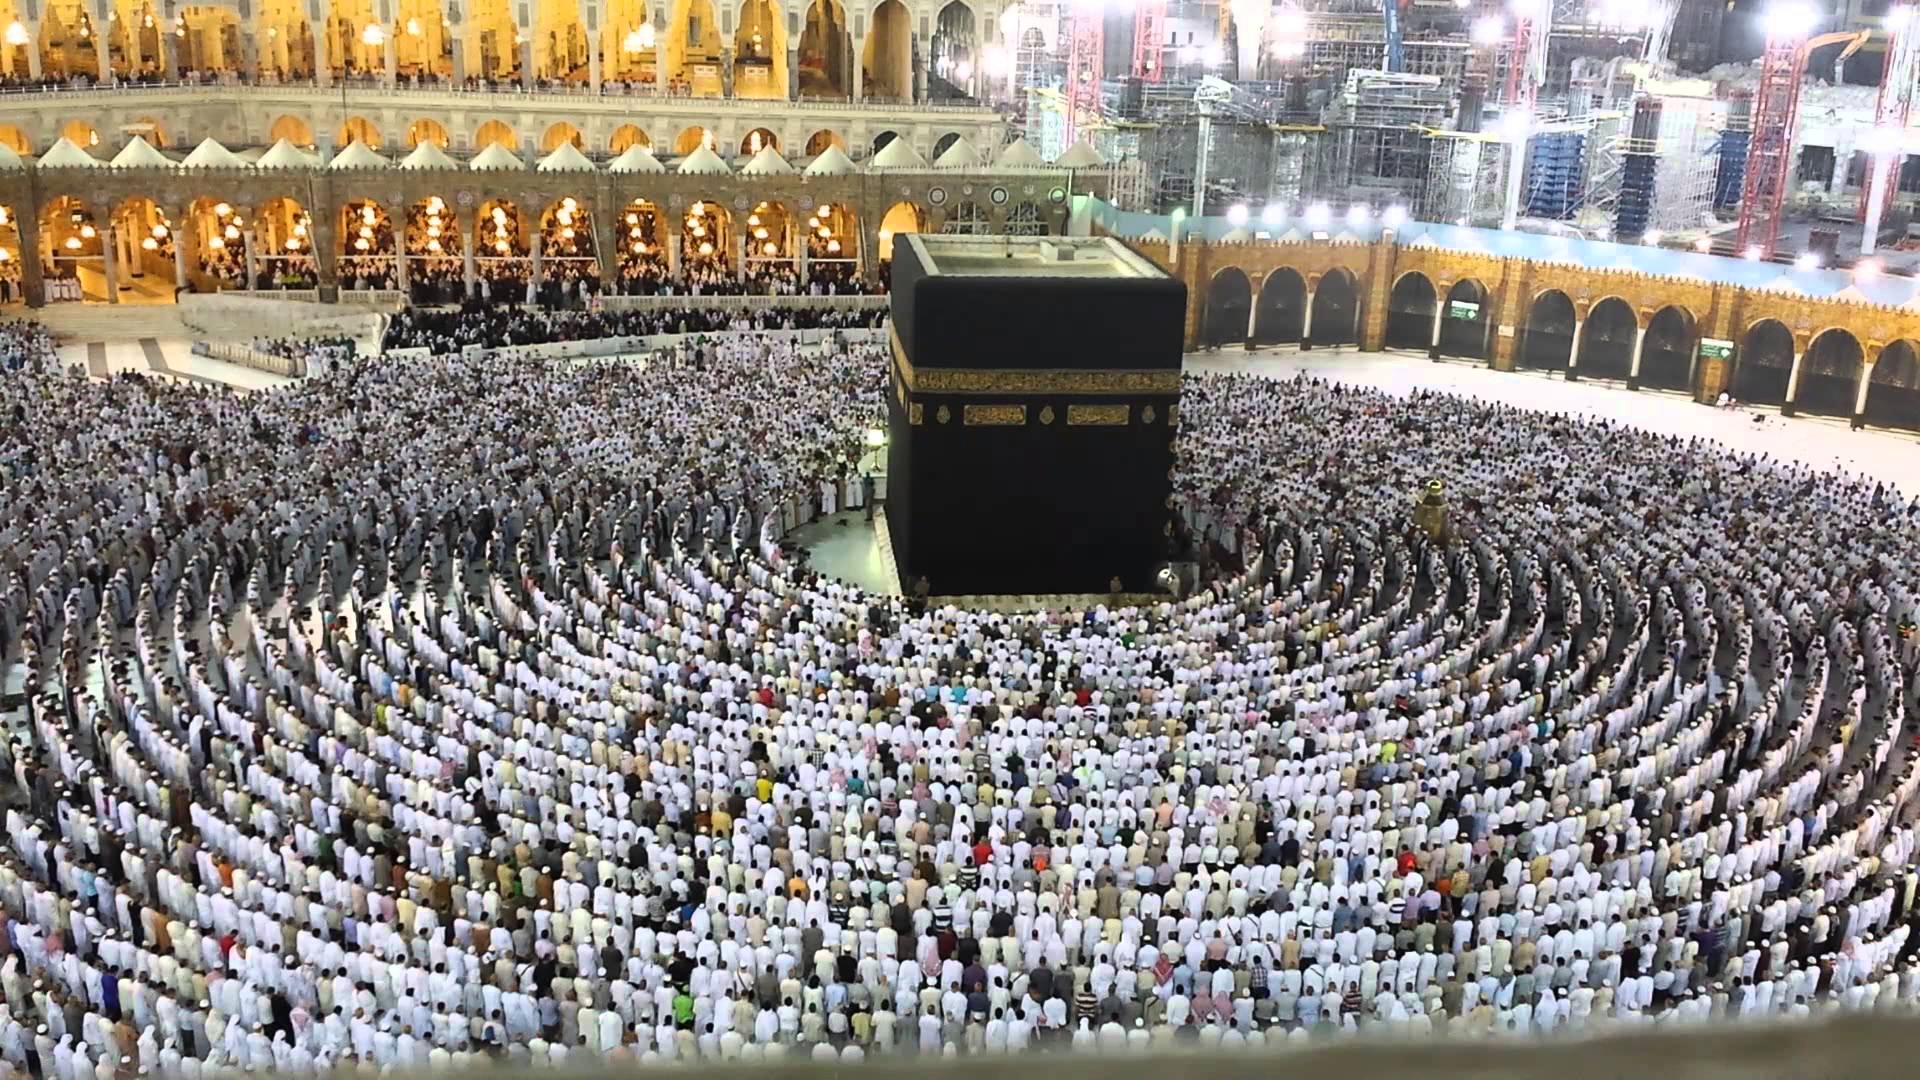 Top Saudi Imam Calls to Kill Christians, Jews & Shia Muslims in Prayer Broadcast (Video)